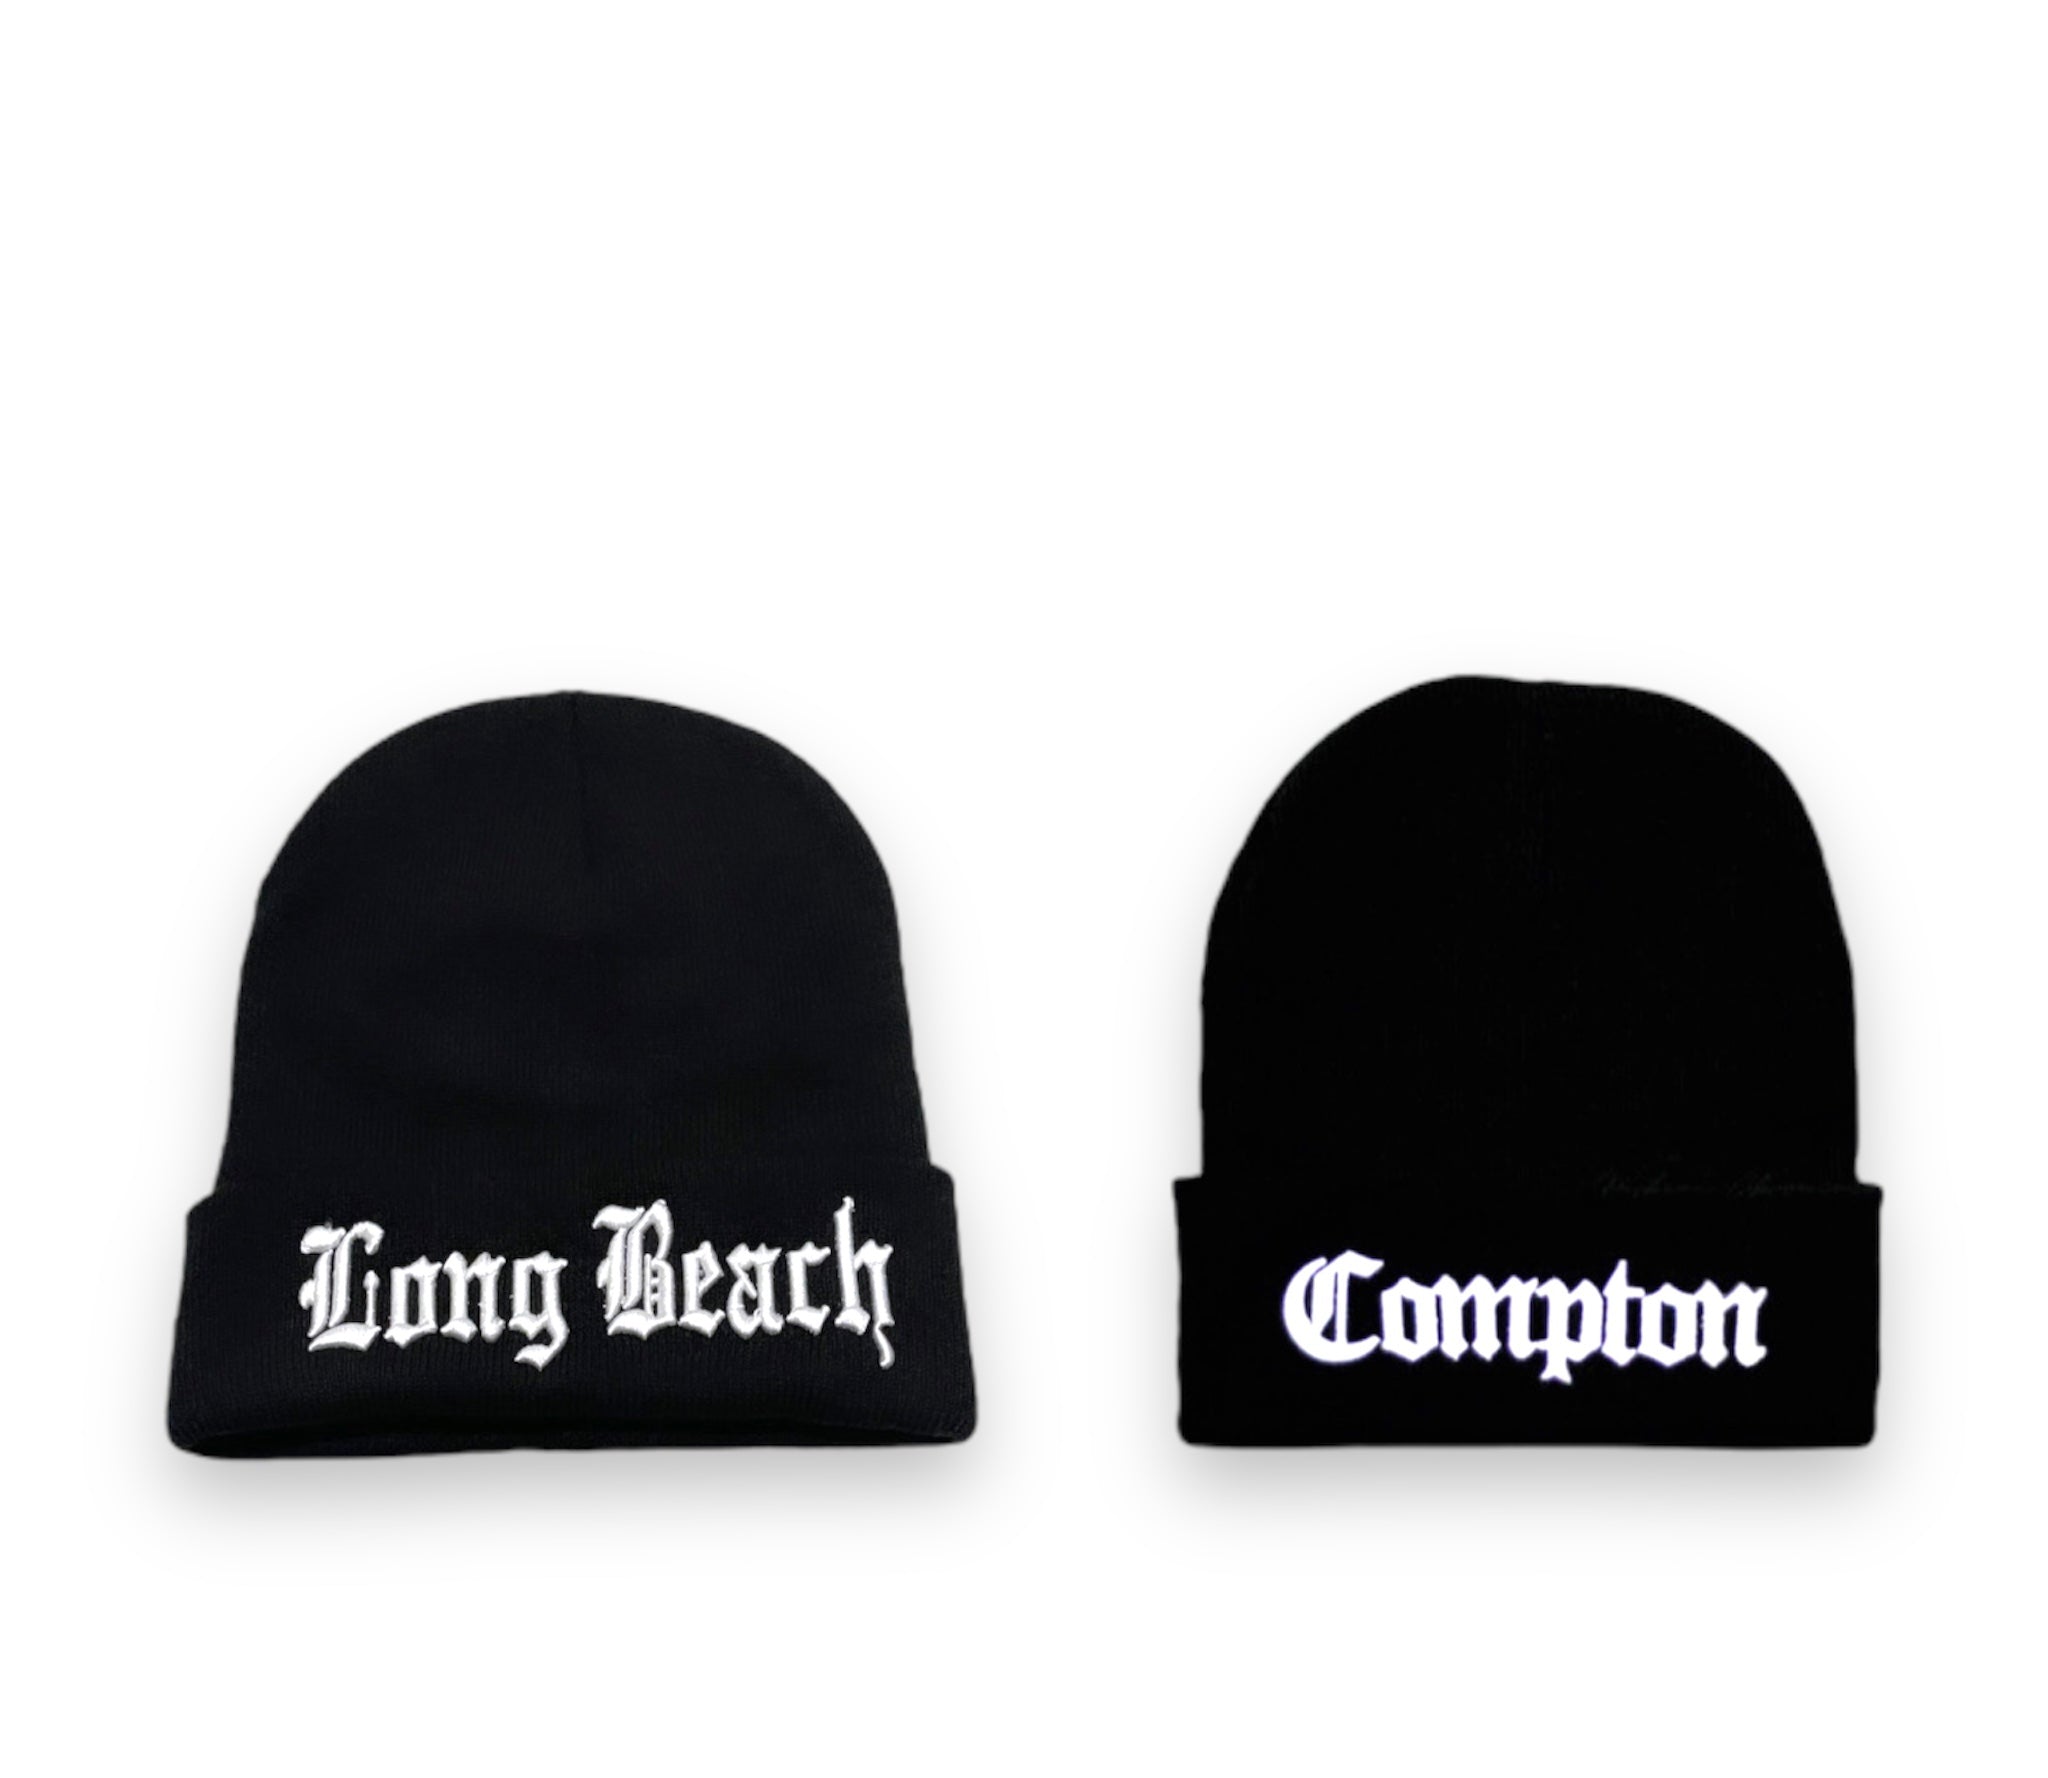 Long Beach & Compton Beanies